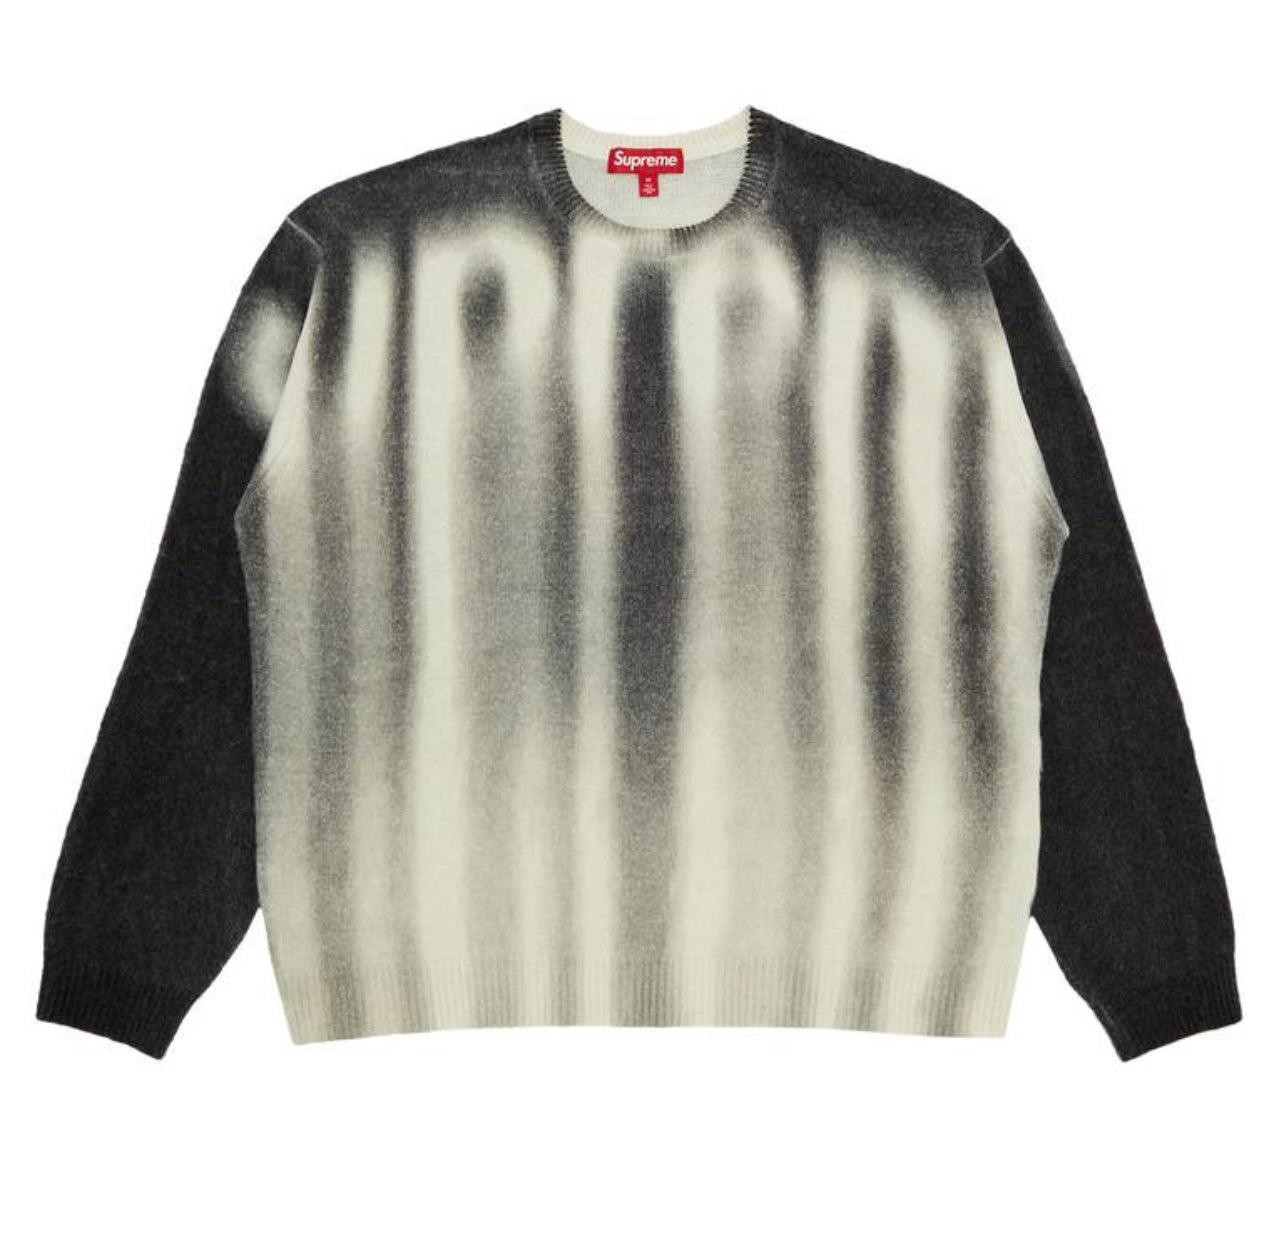 Supreme Blurred Logo Sweater “Black”